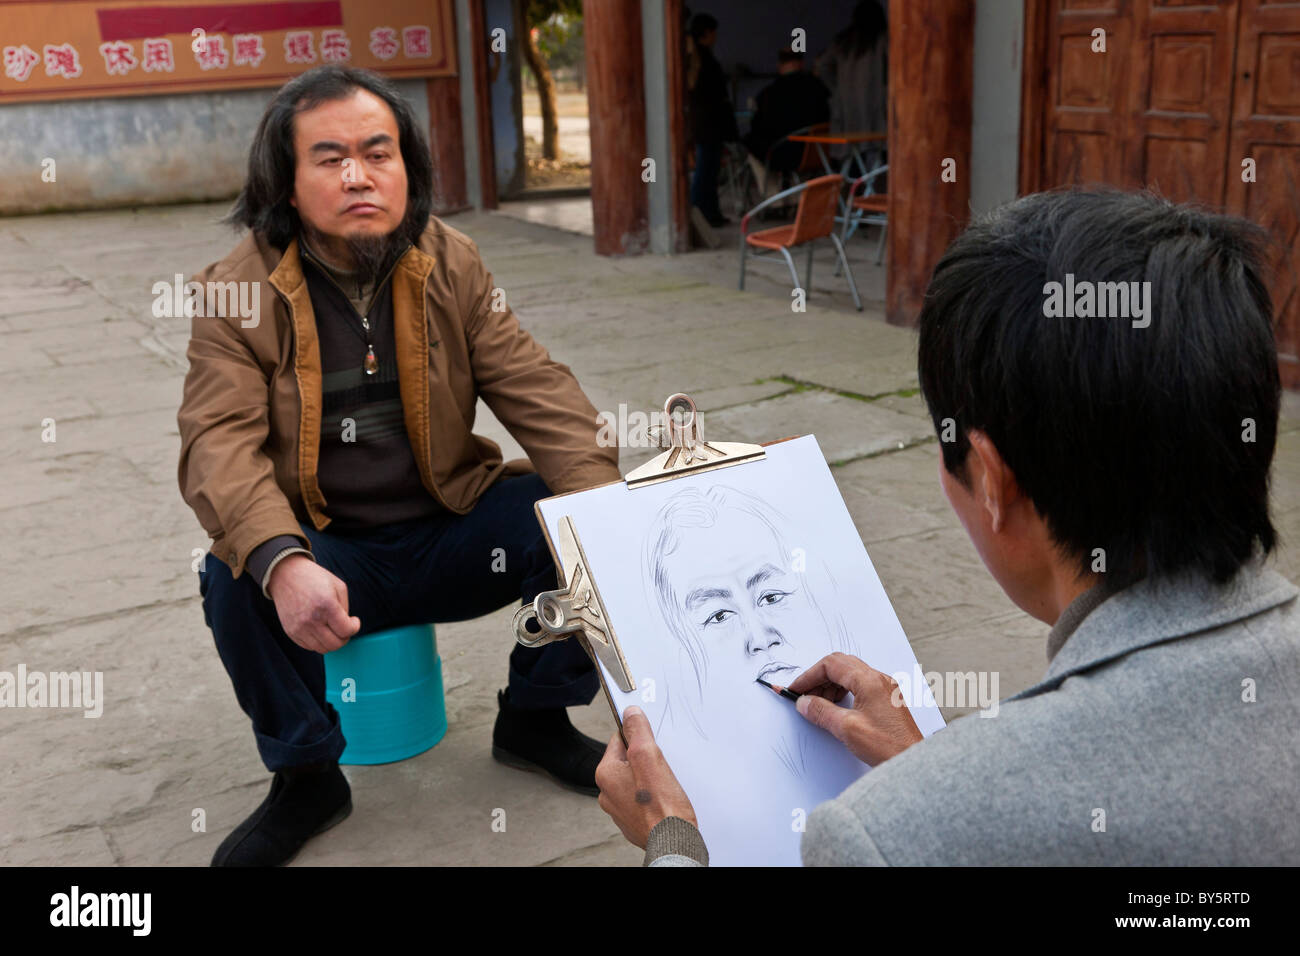 L'artista di strada facendo uno schizzo a matita di un uomo in Huanglongxi, vicino a Chengdu, nella provincia di Sichuan, in Cina. JMH4349 Foto Stock